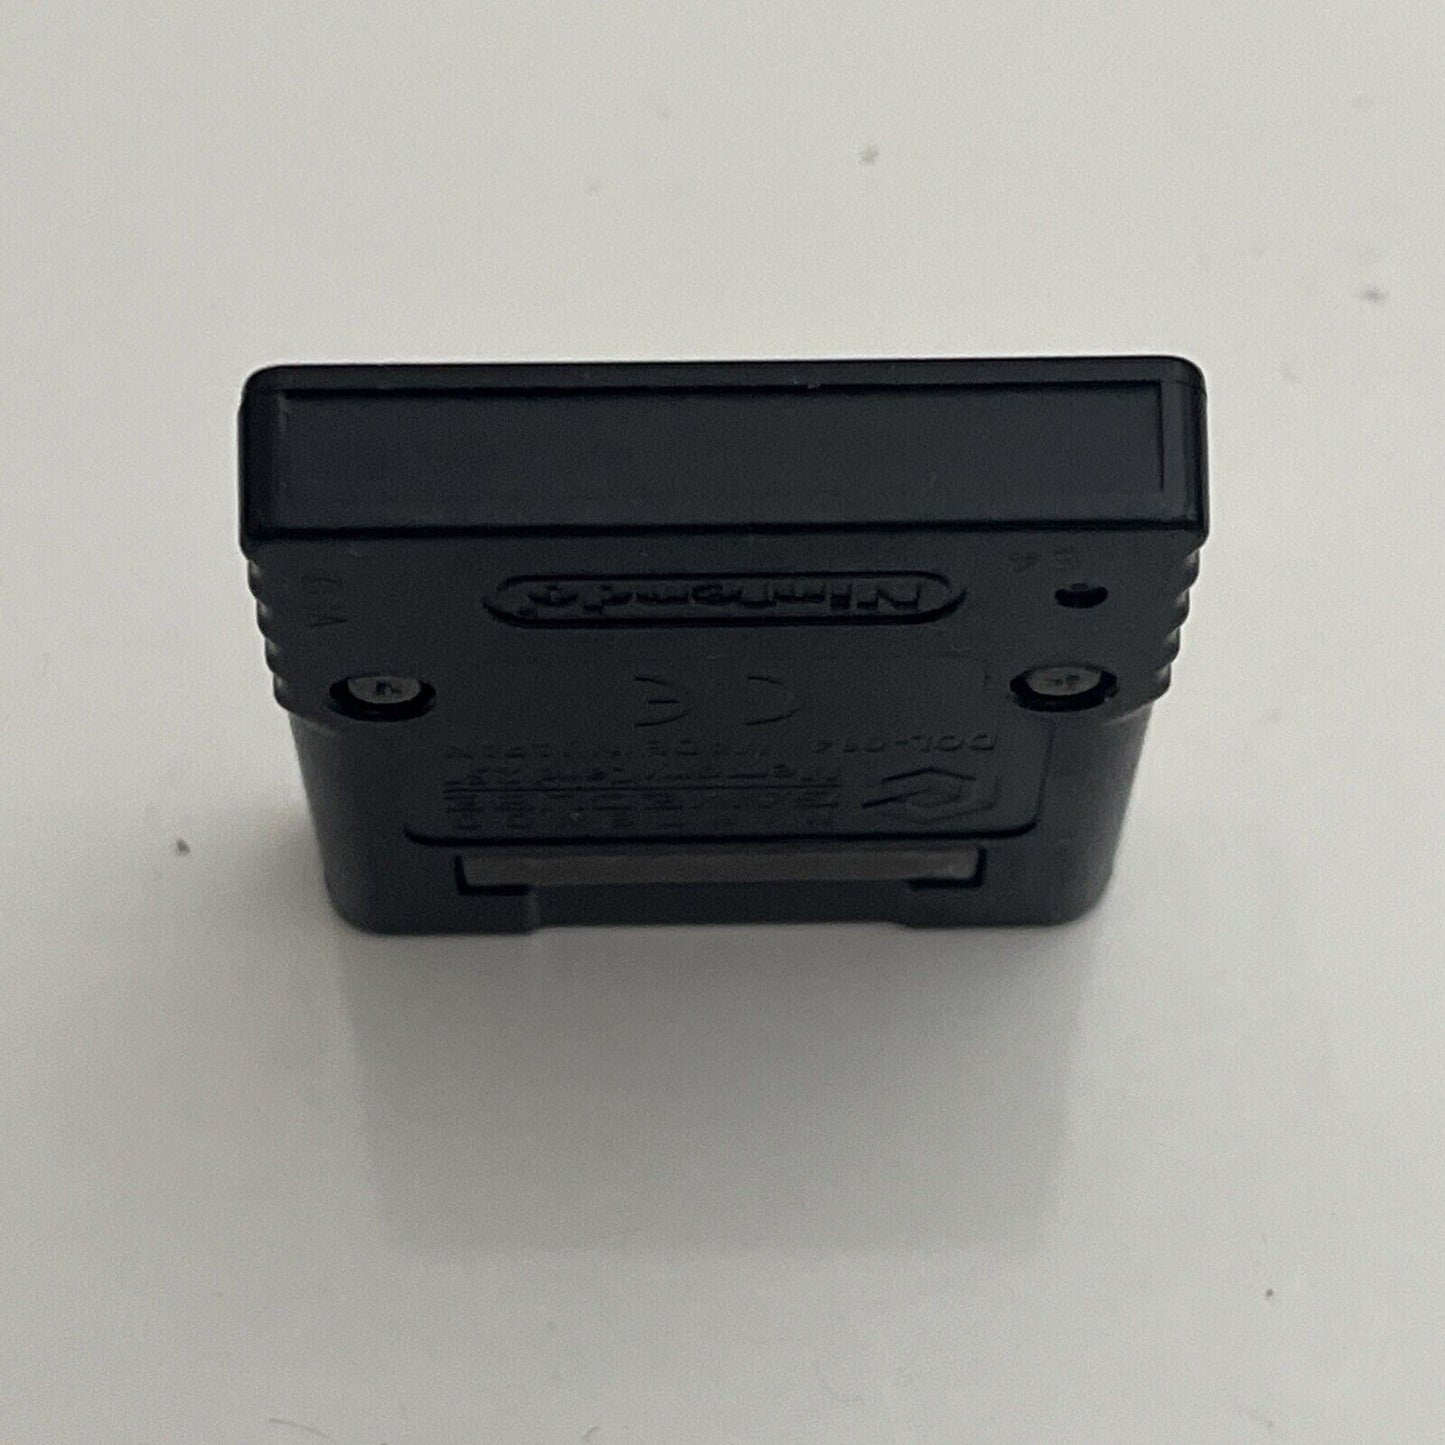 Genuine Official Nintendo GameCube Memory Card Black 251 Blocks DOL-014